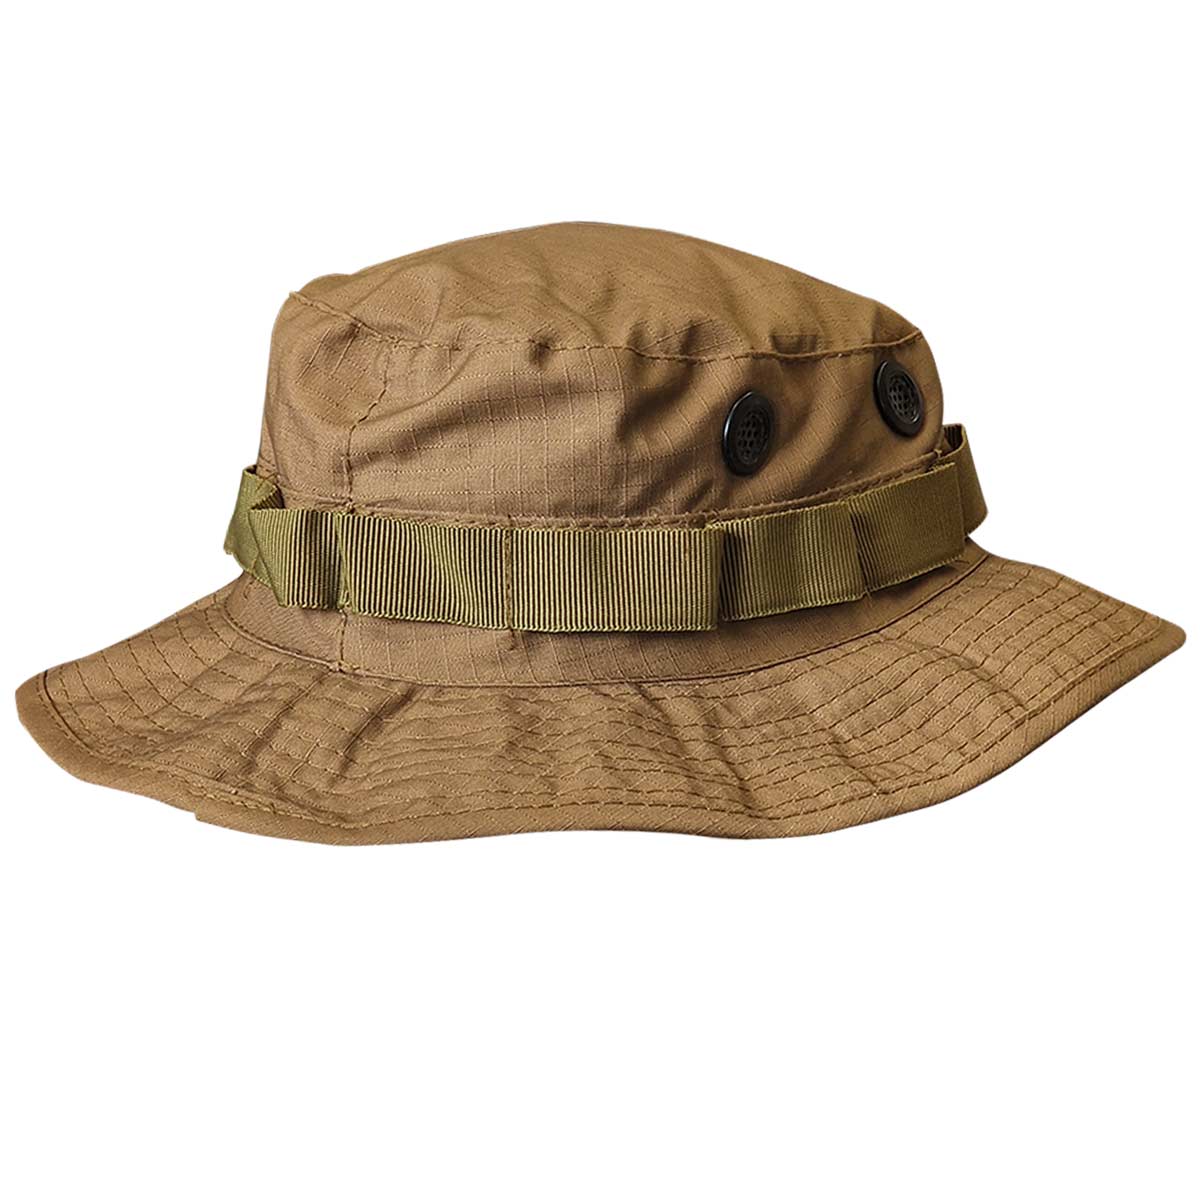 MFH US GI Military Boonie Bush Jungle Hat Army Combat 100% Cotton Ripstop